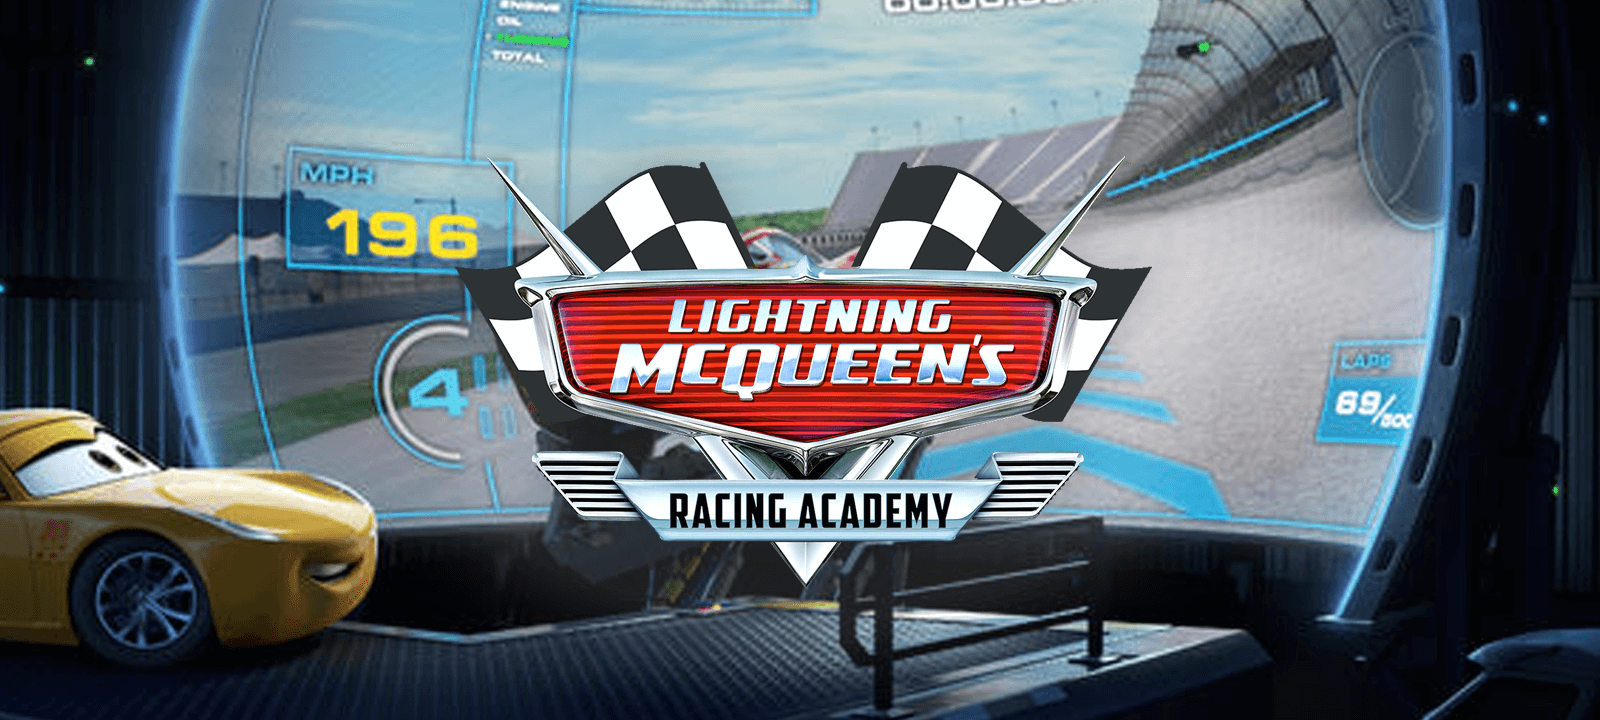 Lightning McQueen's Racing Academy Photos